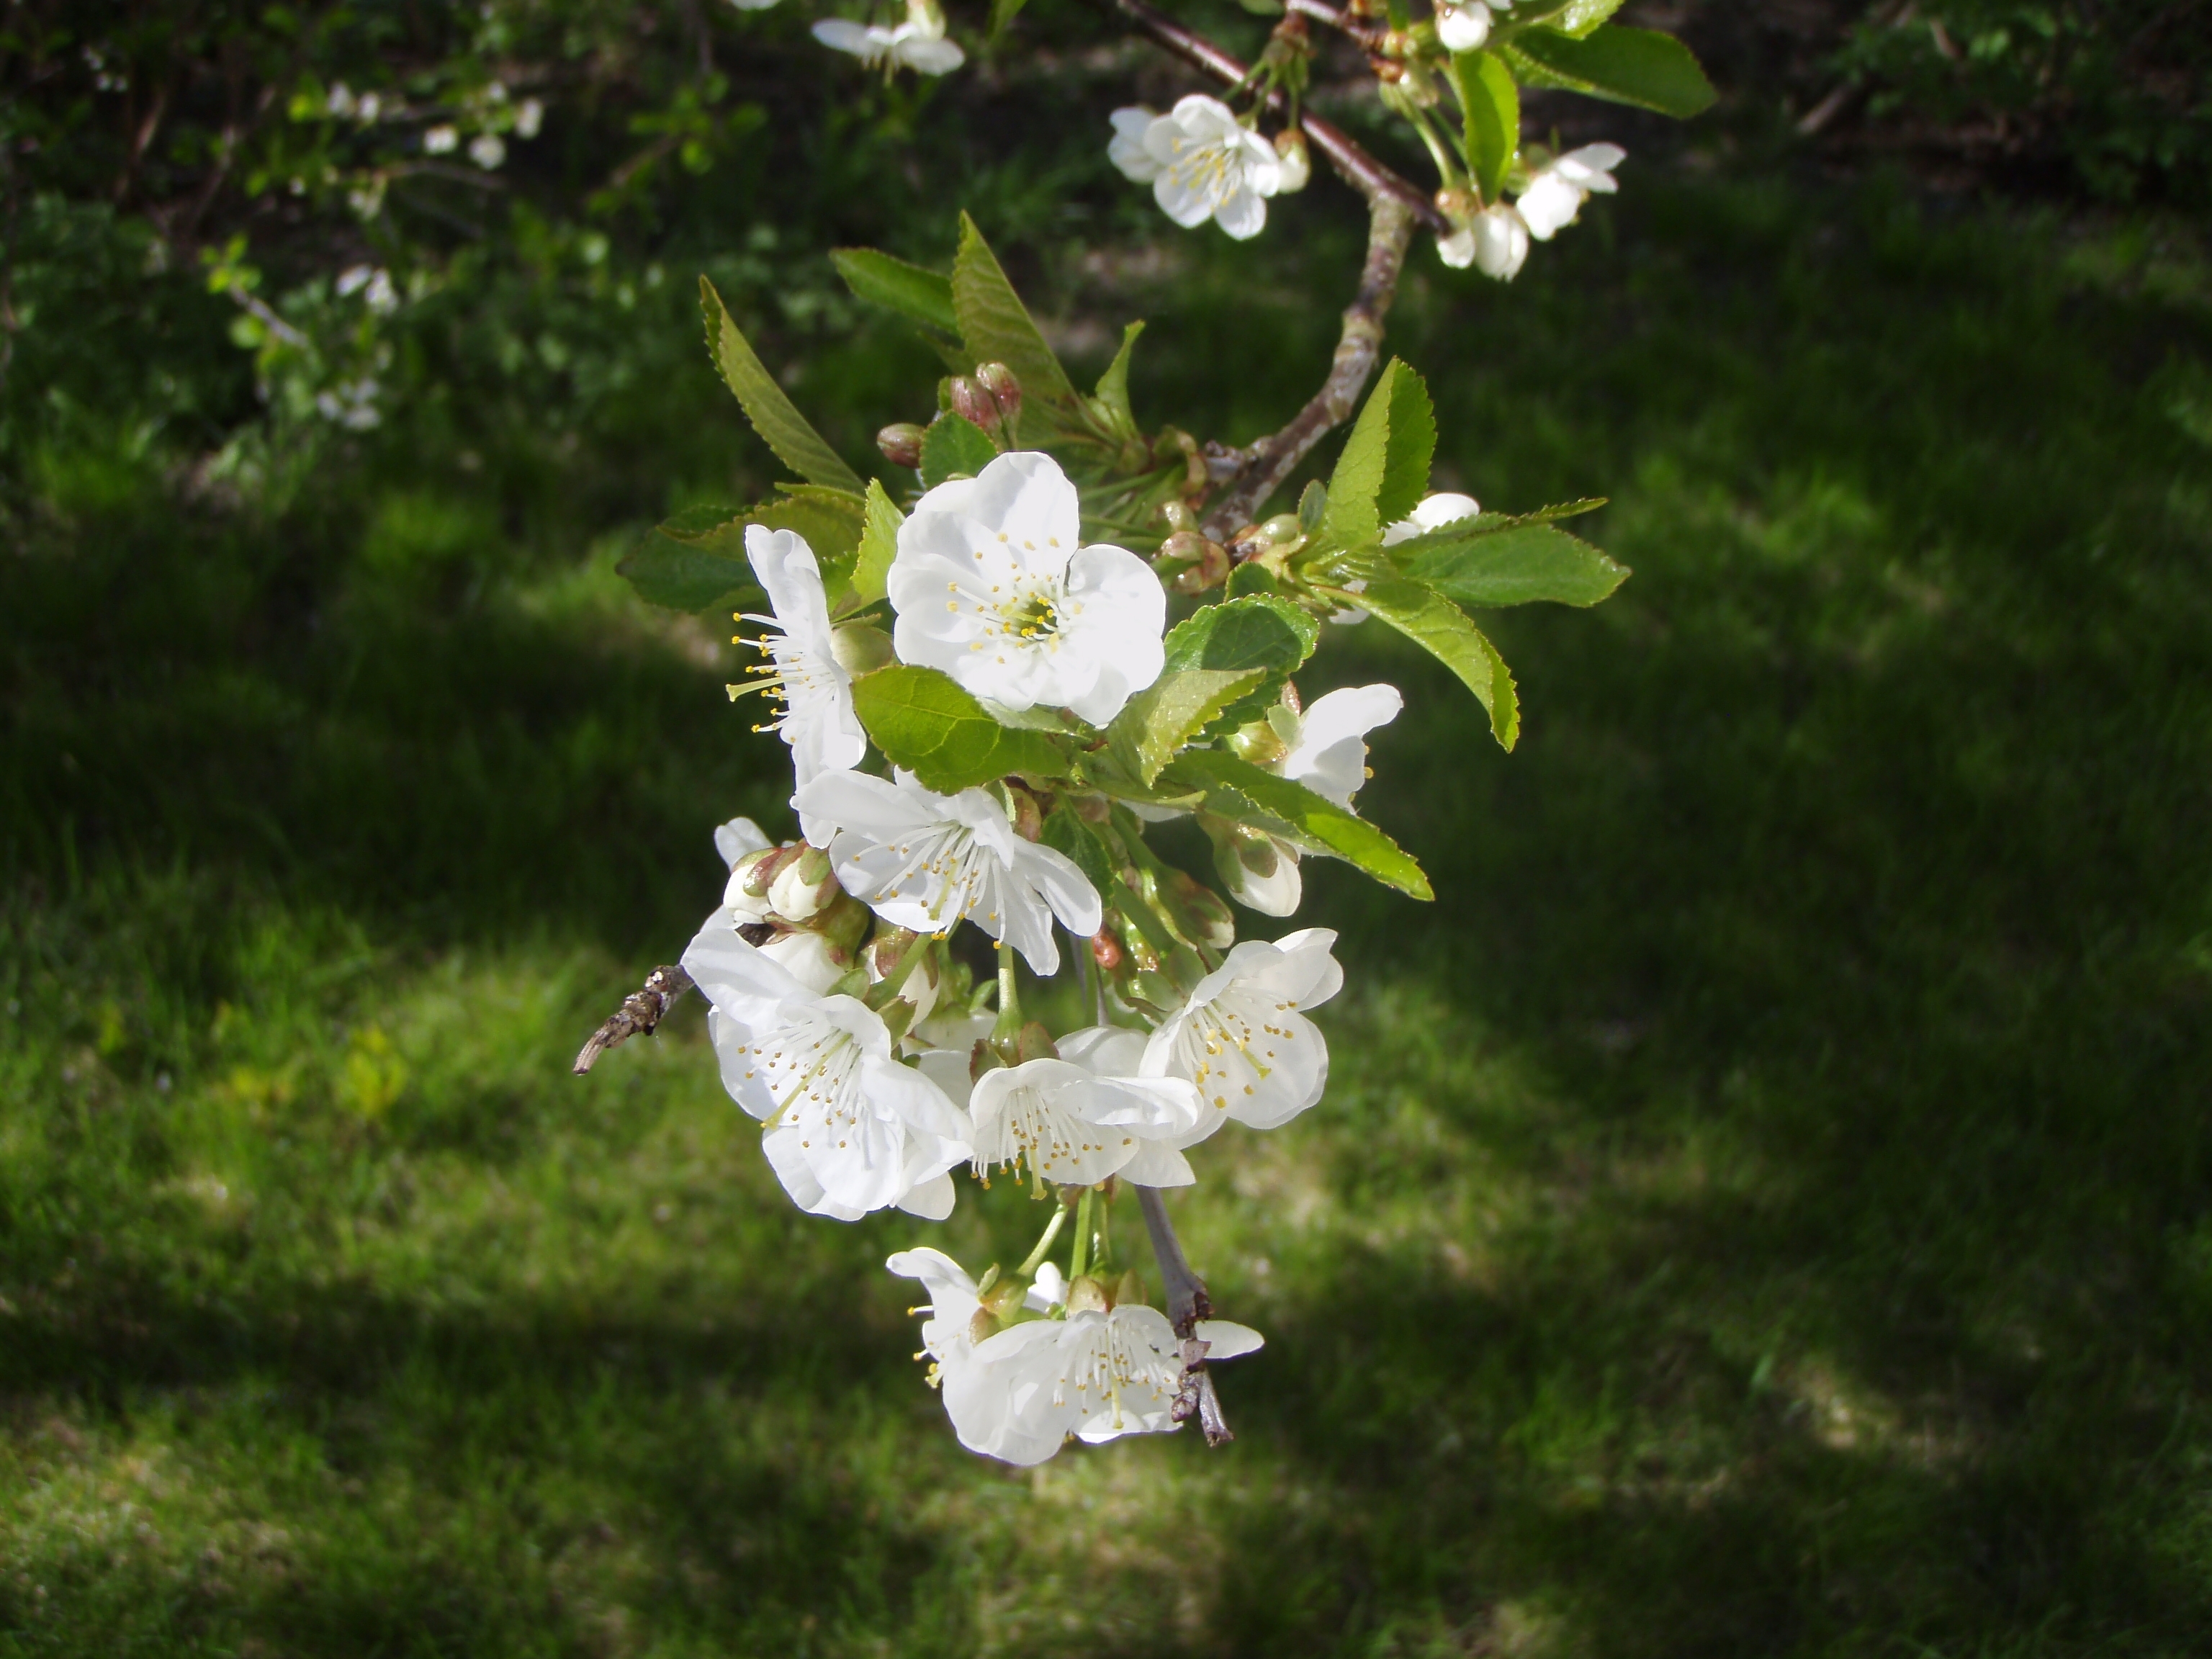 File:Cherry tree flower.JPG - Wikimedia Commons